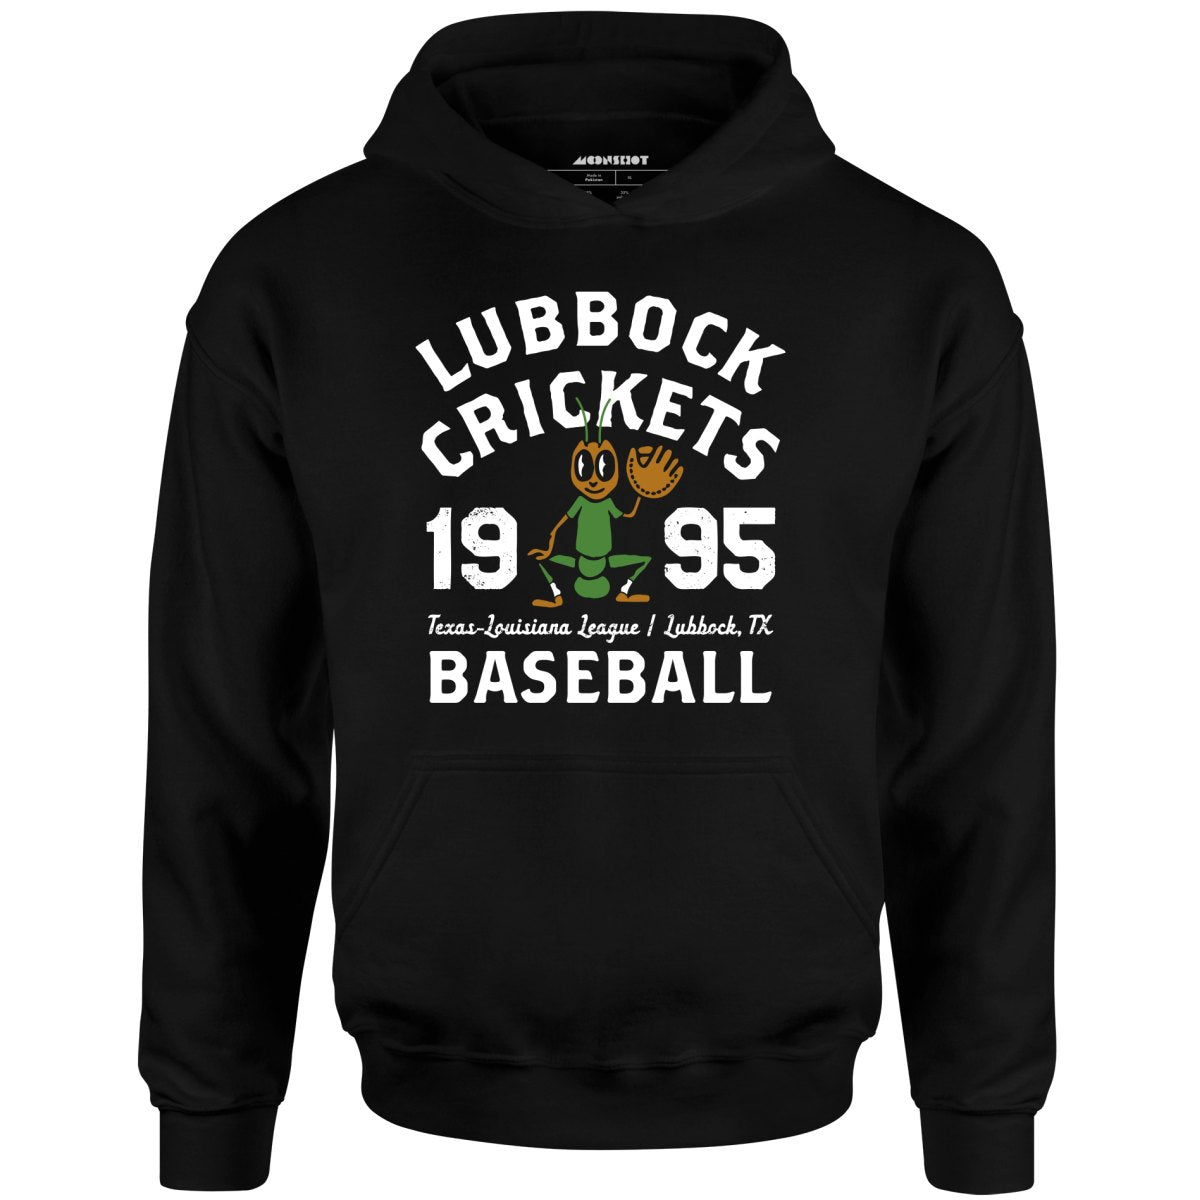 Lubbock Crickets - Texas - Vintage Defunct Baseball Teams - Unisex Hoodie